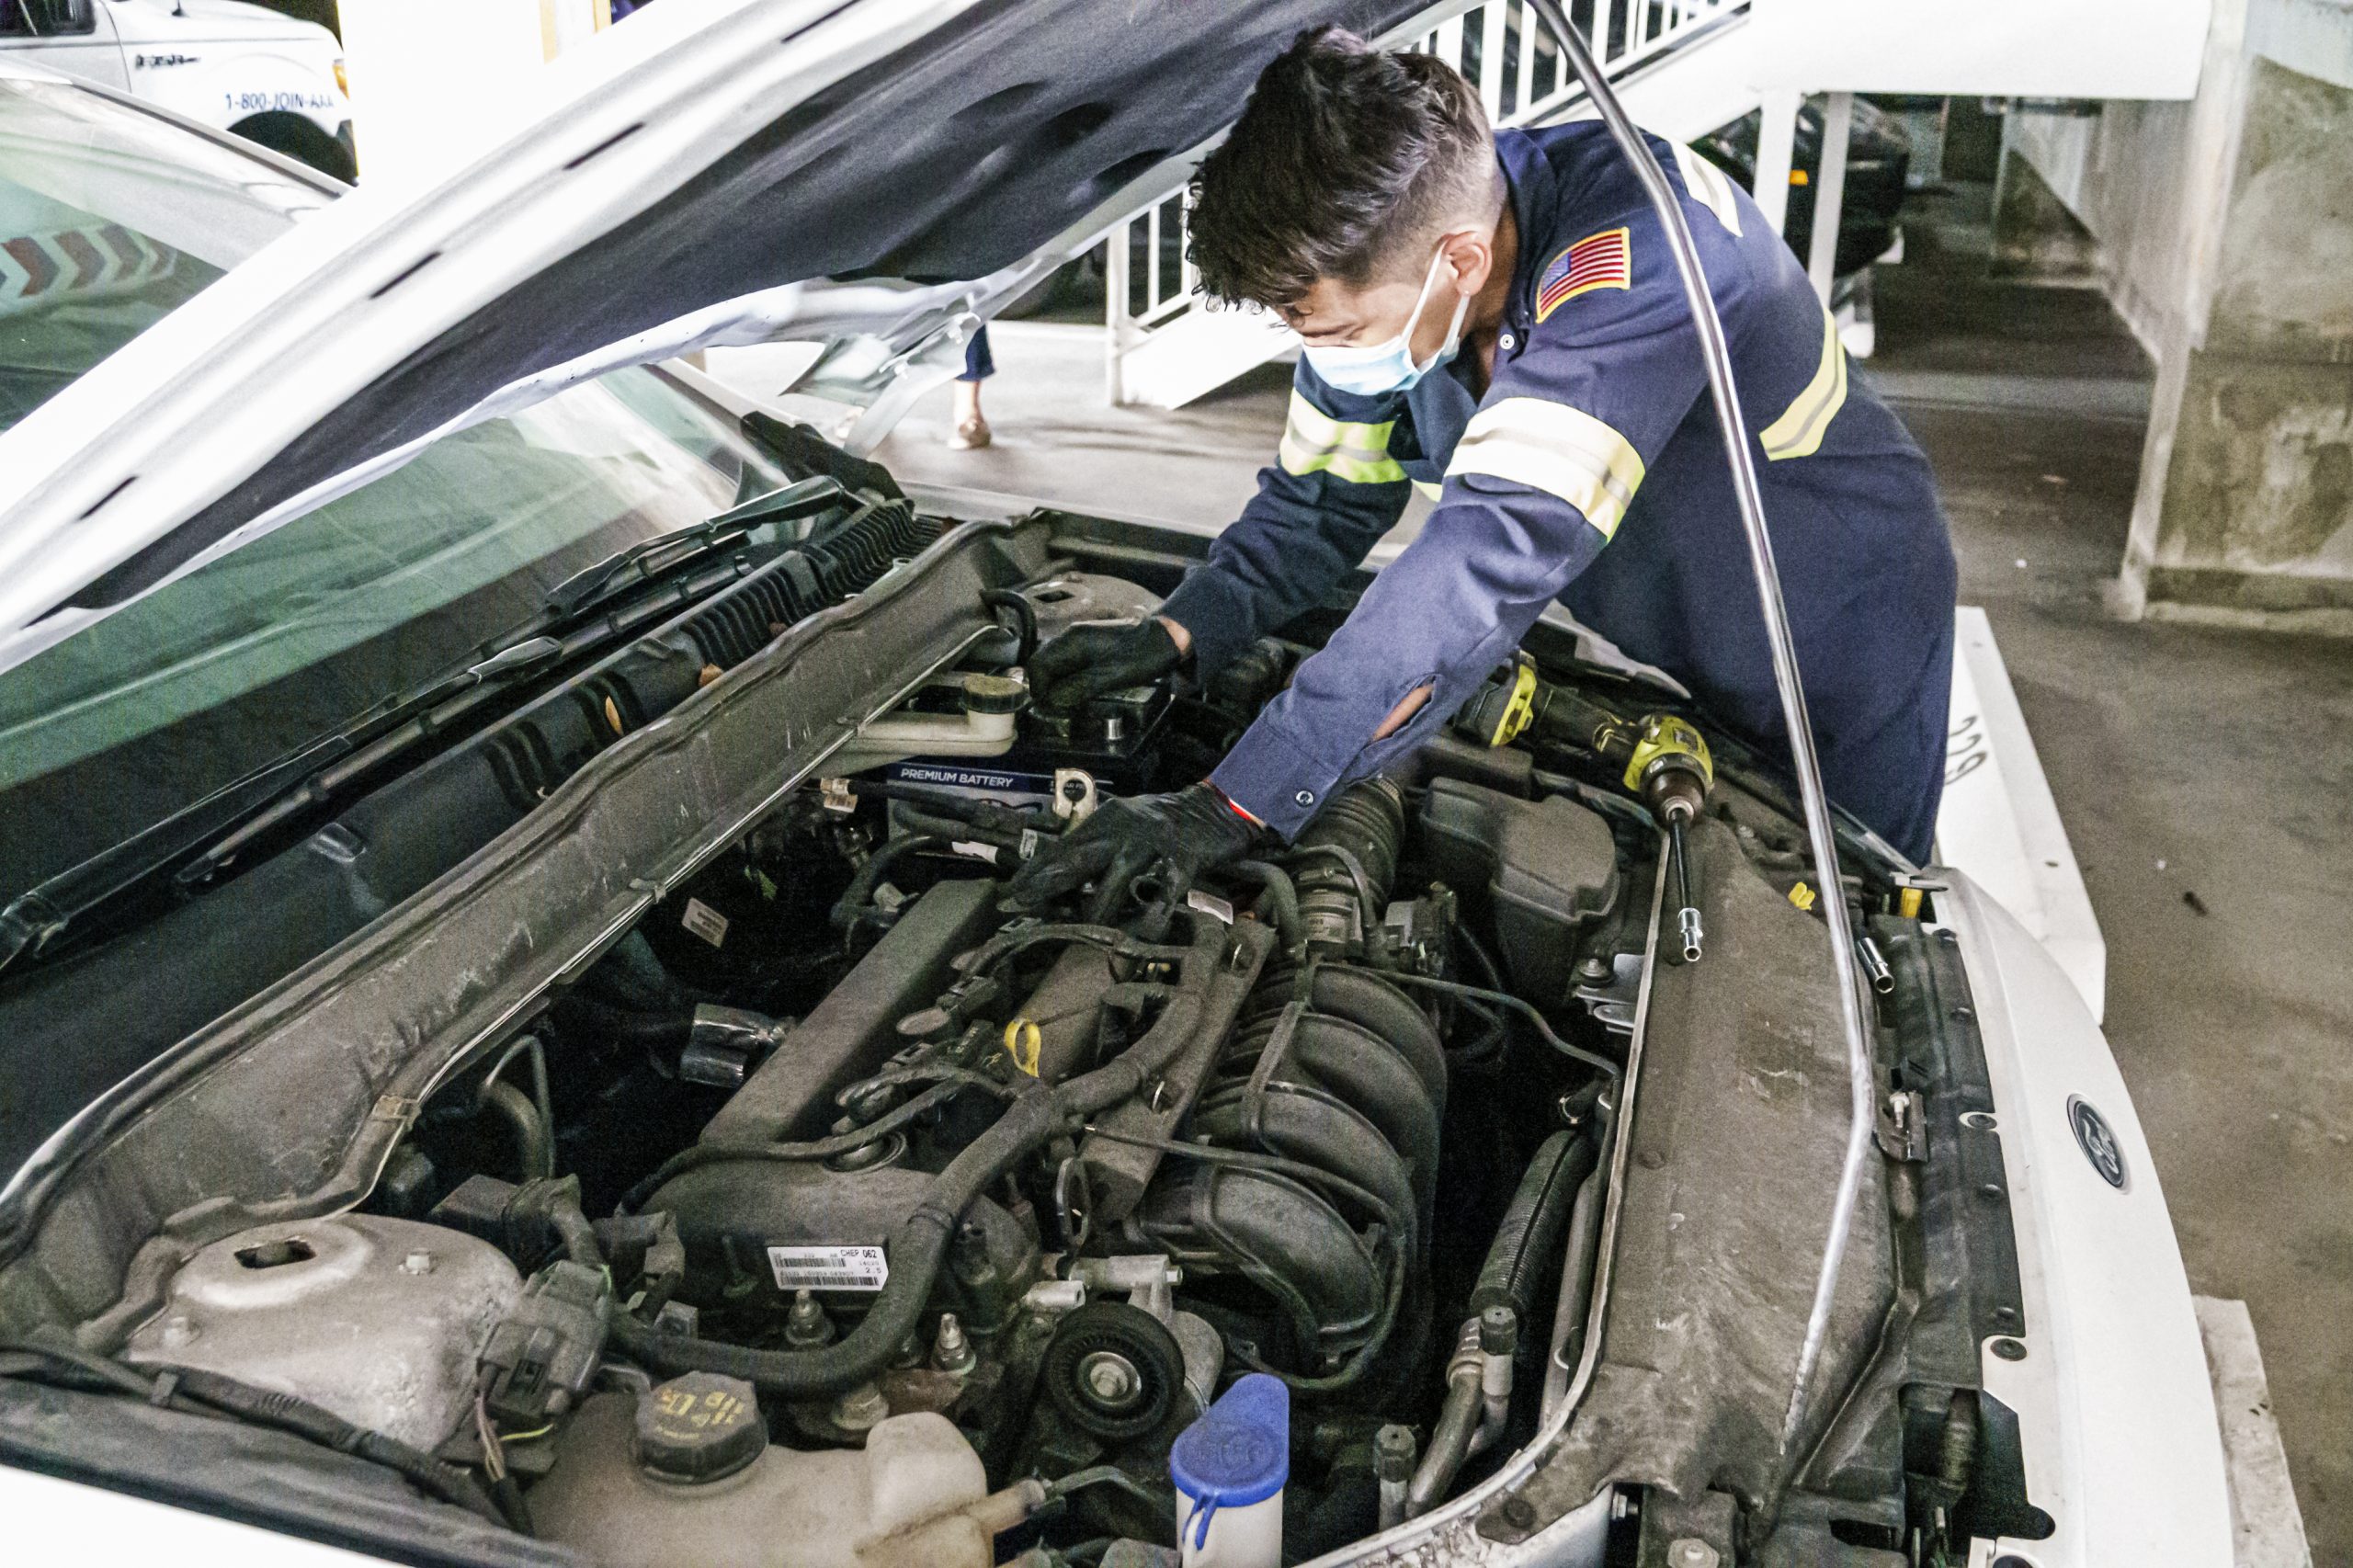 independent car repair shop service technician